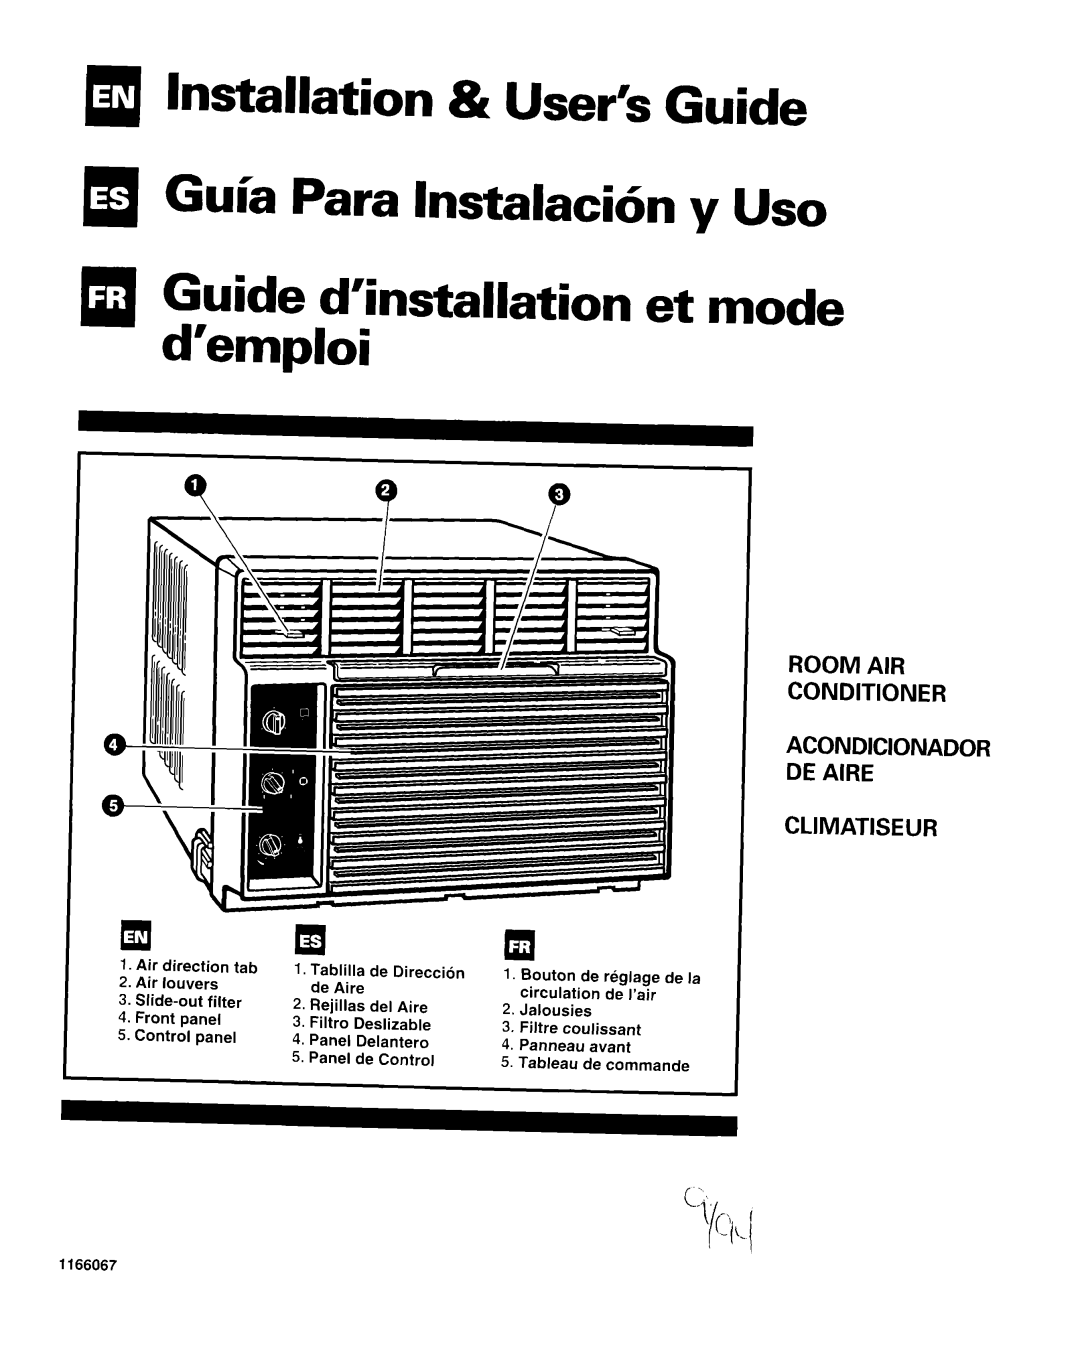 Whirlpool AR1800XA0 manual a Installation & User’s Guide, m Gul’a Para Instalacih y Uso, Climatiseur 